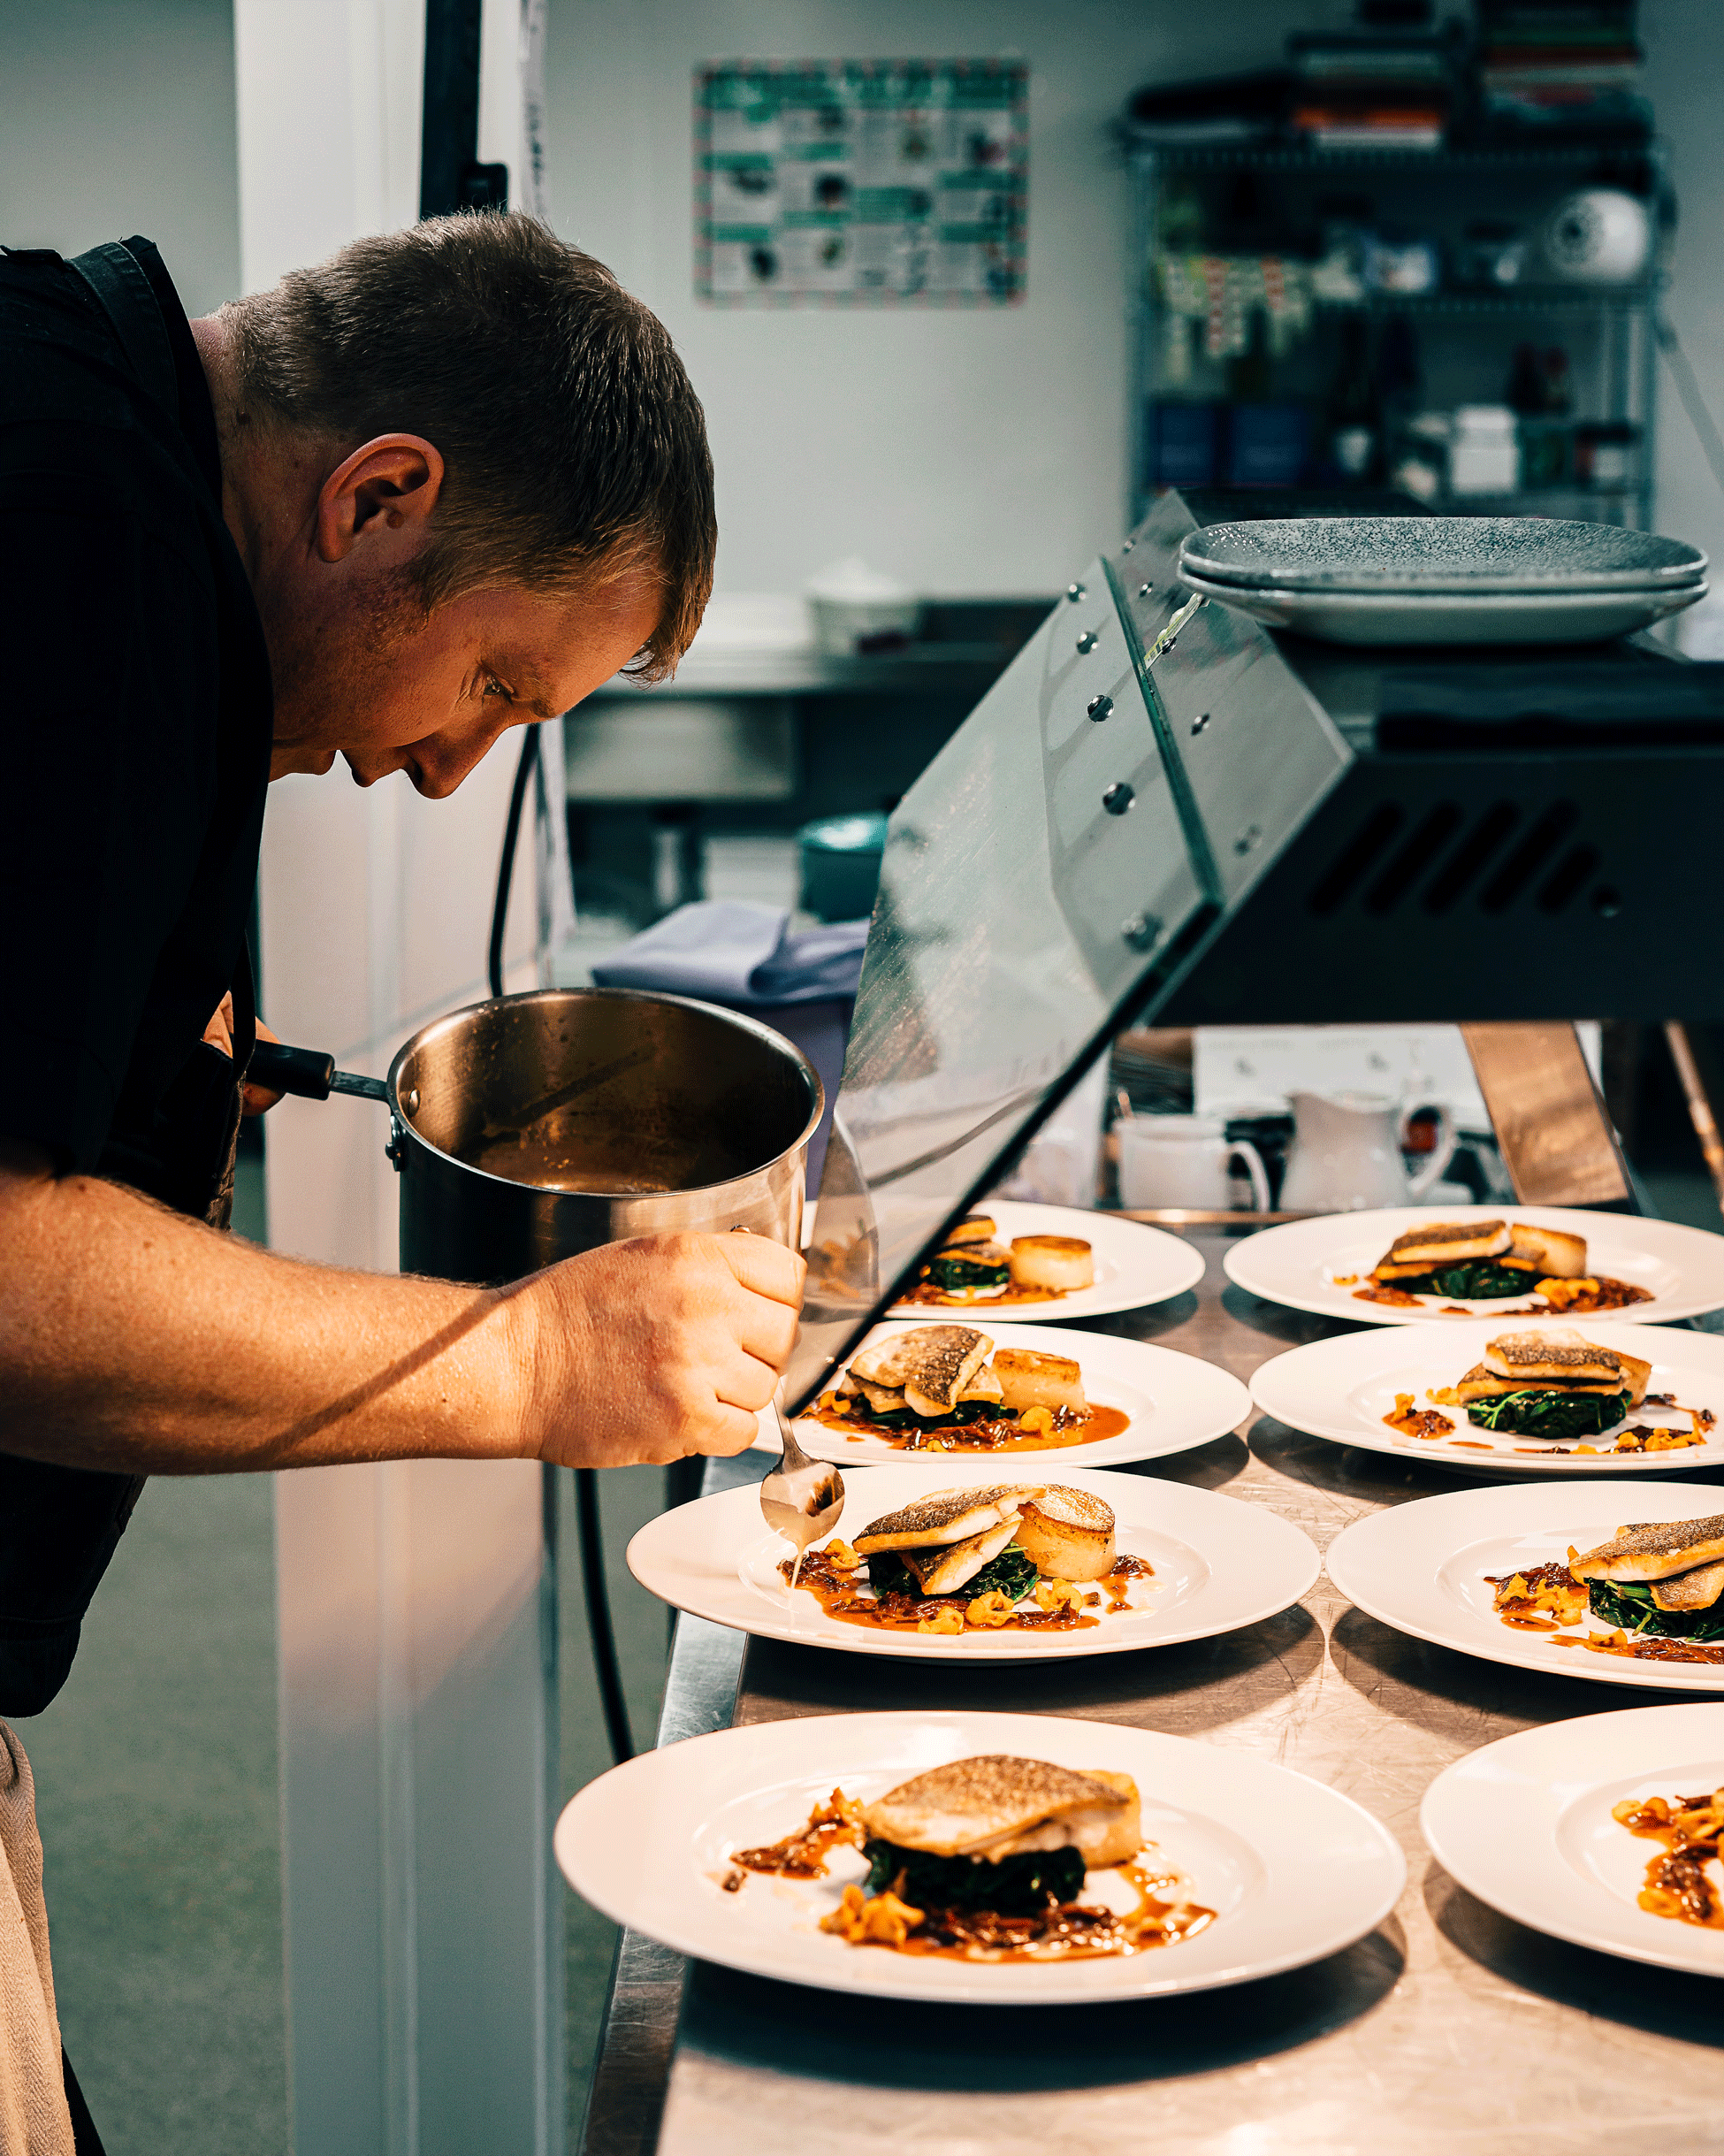 Chef preparing plates of food